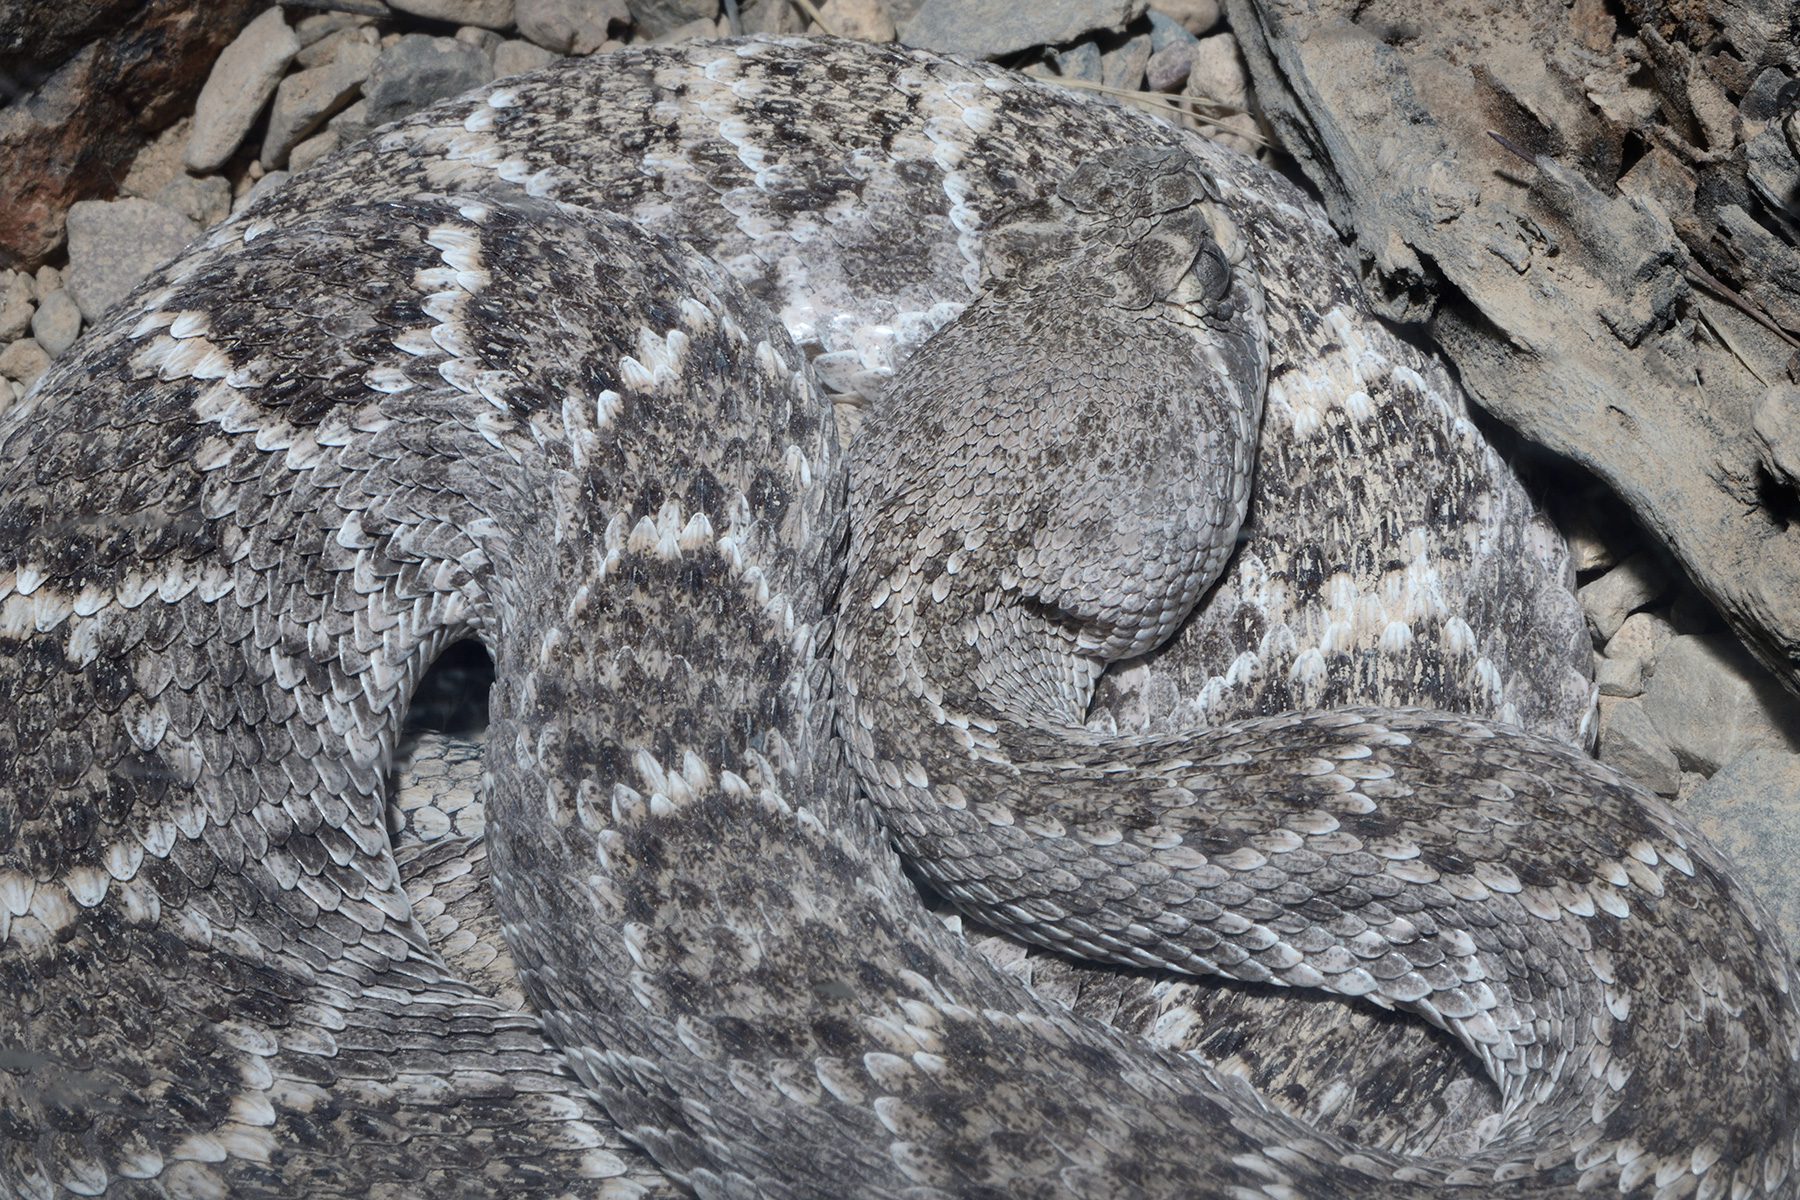 Désert de Sonora (Arizona, USA) - Serpent à sonnette (rattlesnake) lové